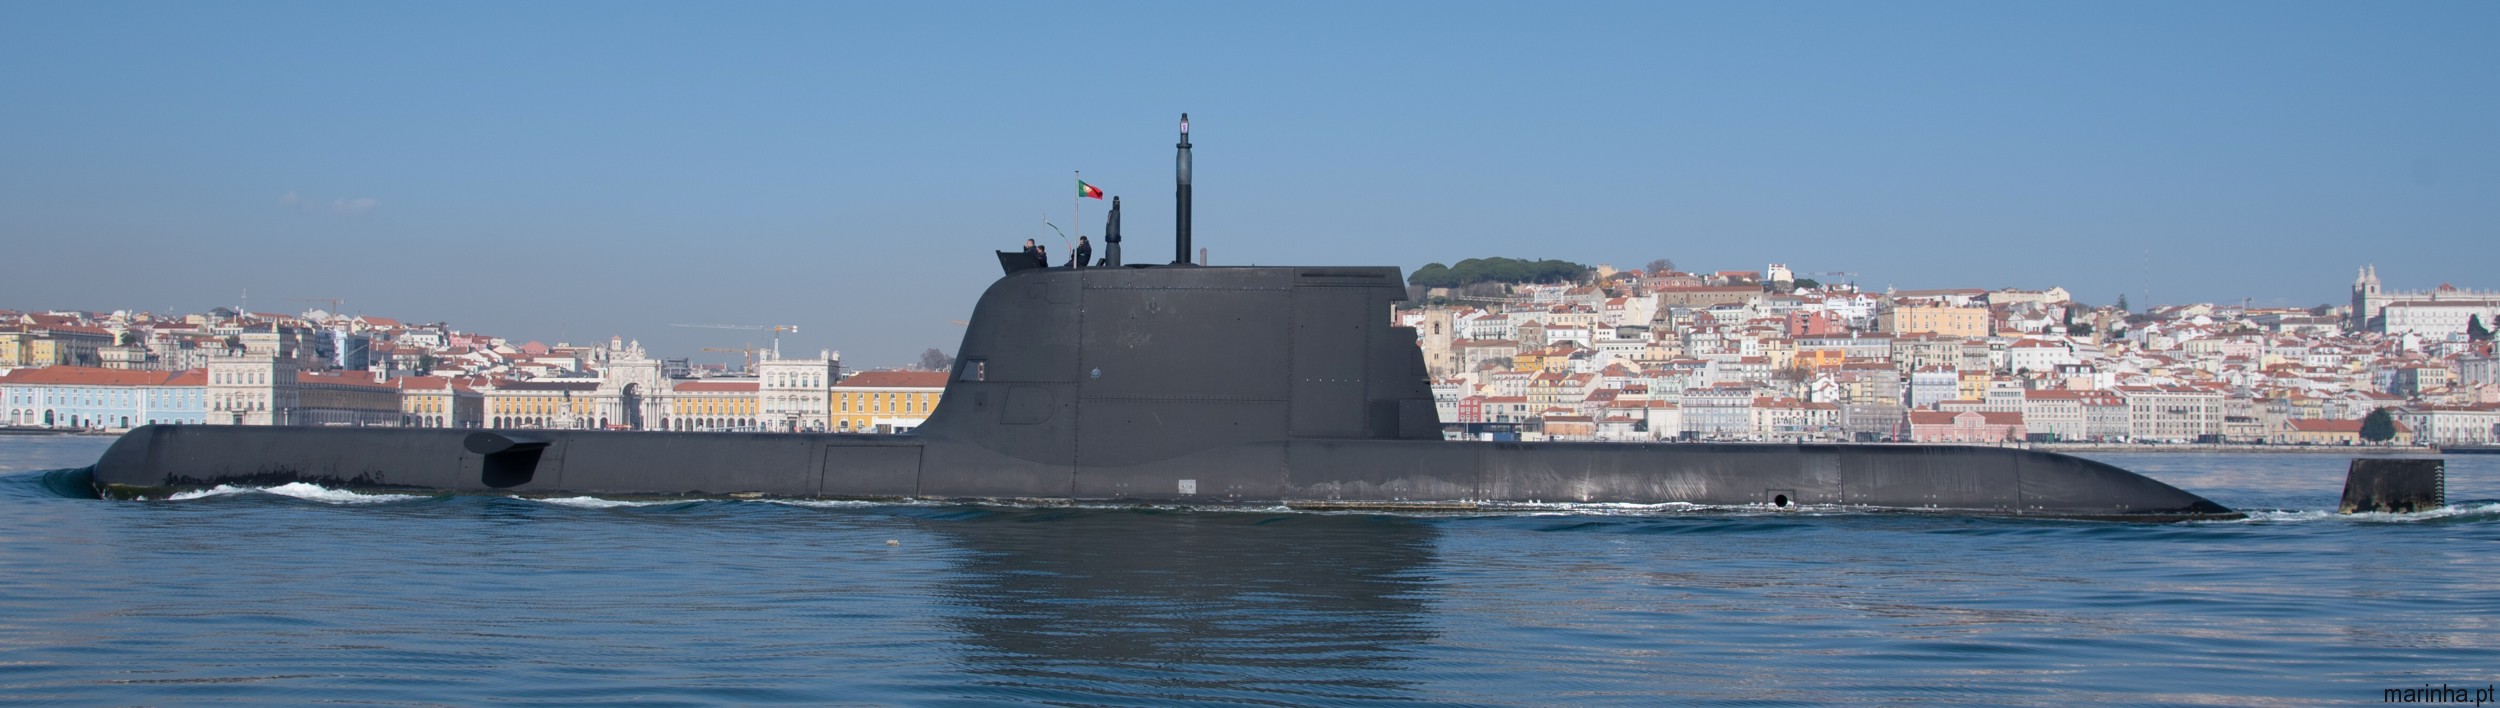 s-161 nrp arpao tridente class type 209pn attack submarine ssk aip portuguese navy marinha 08